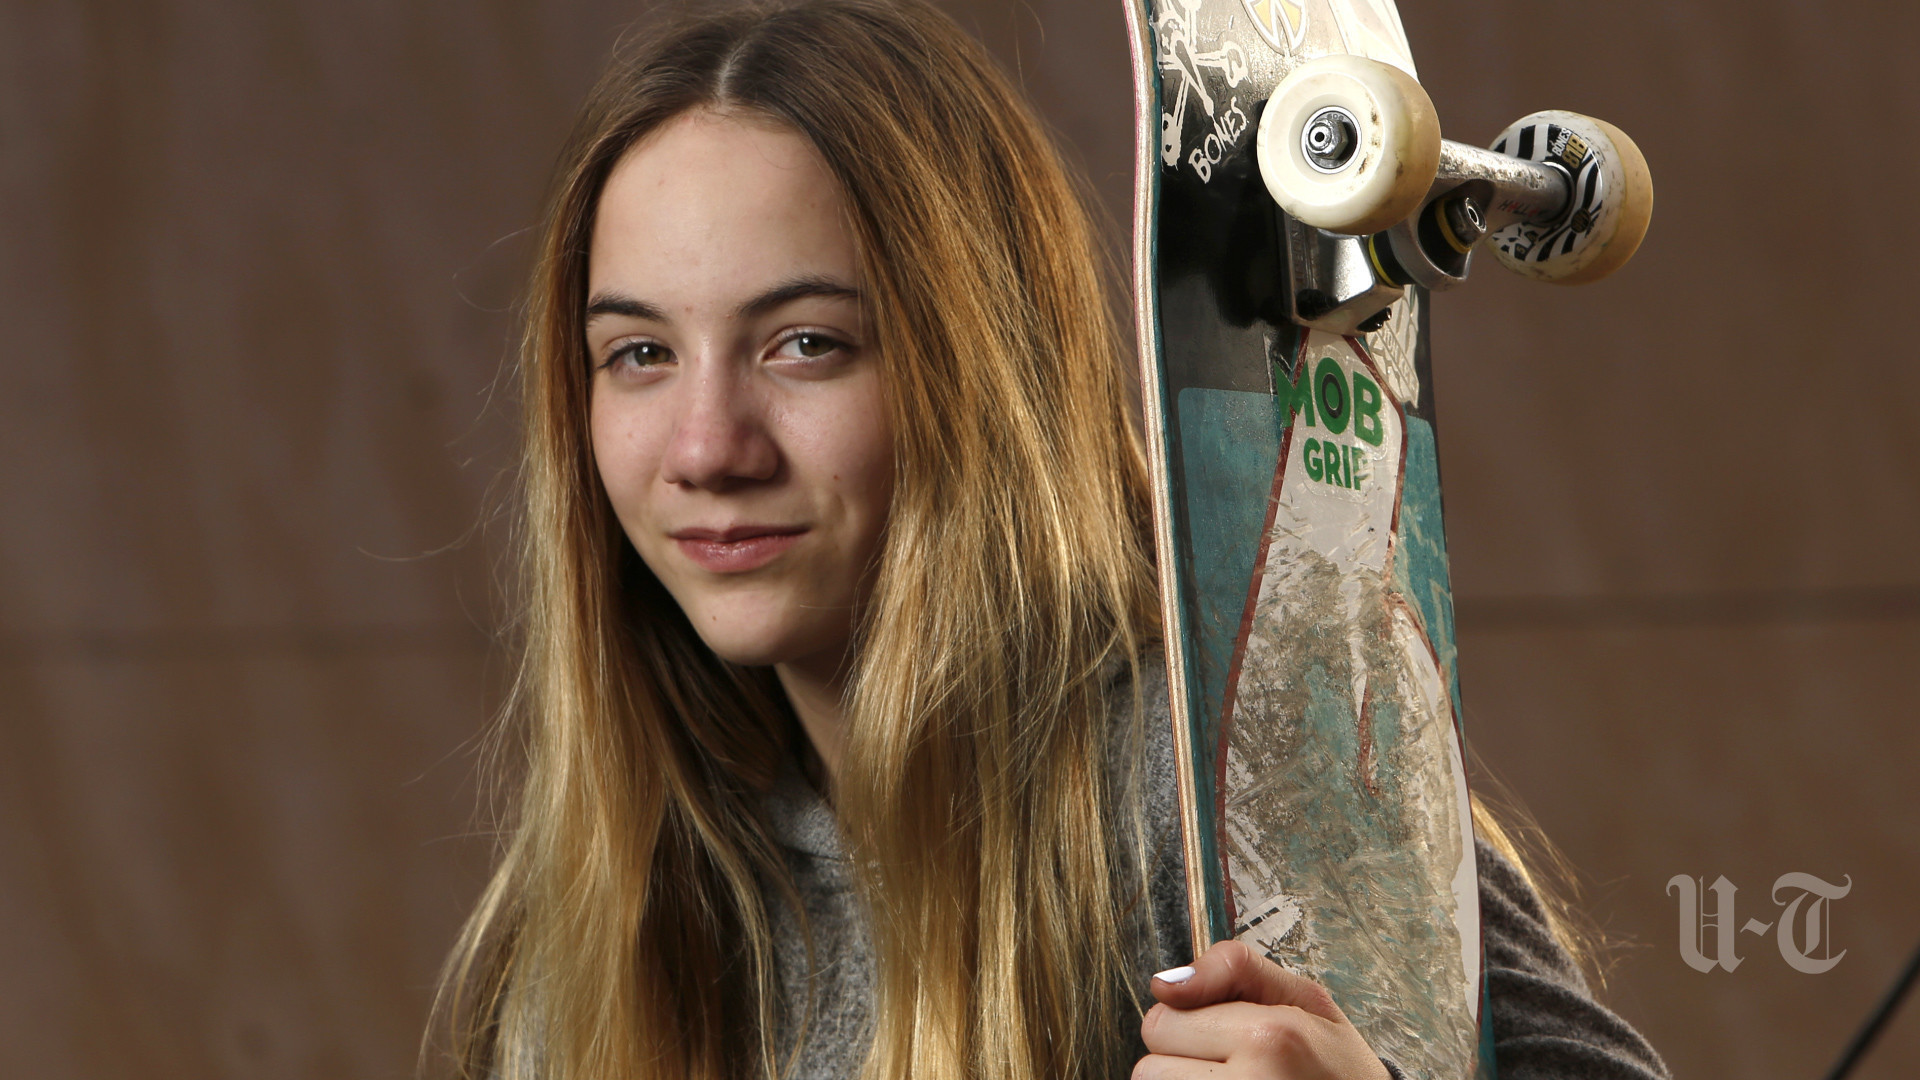 Encinitas girl riding high as world-champion skateboarder - The San